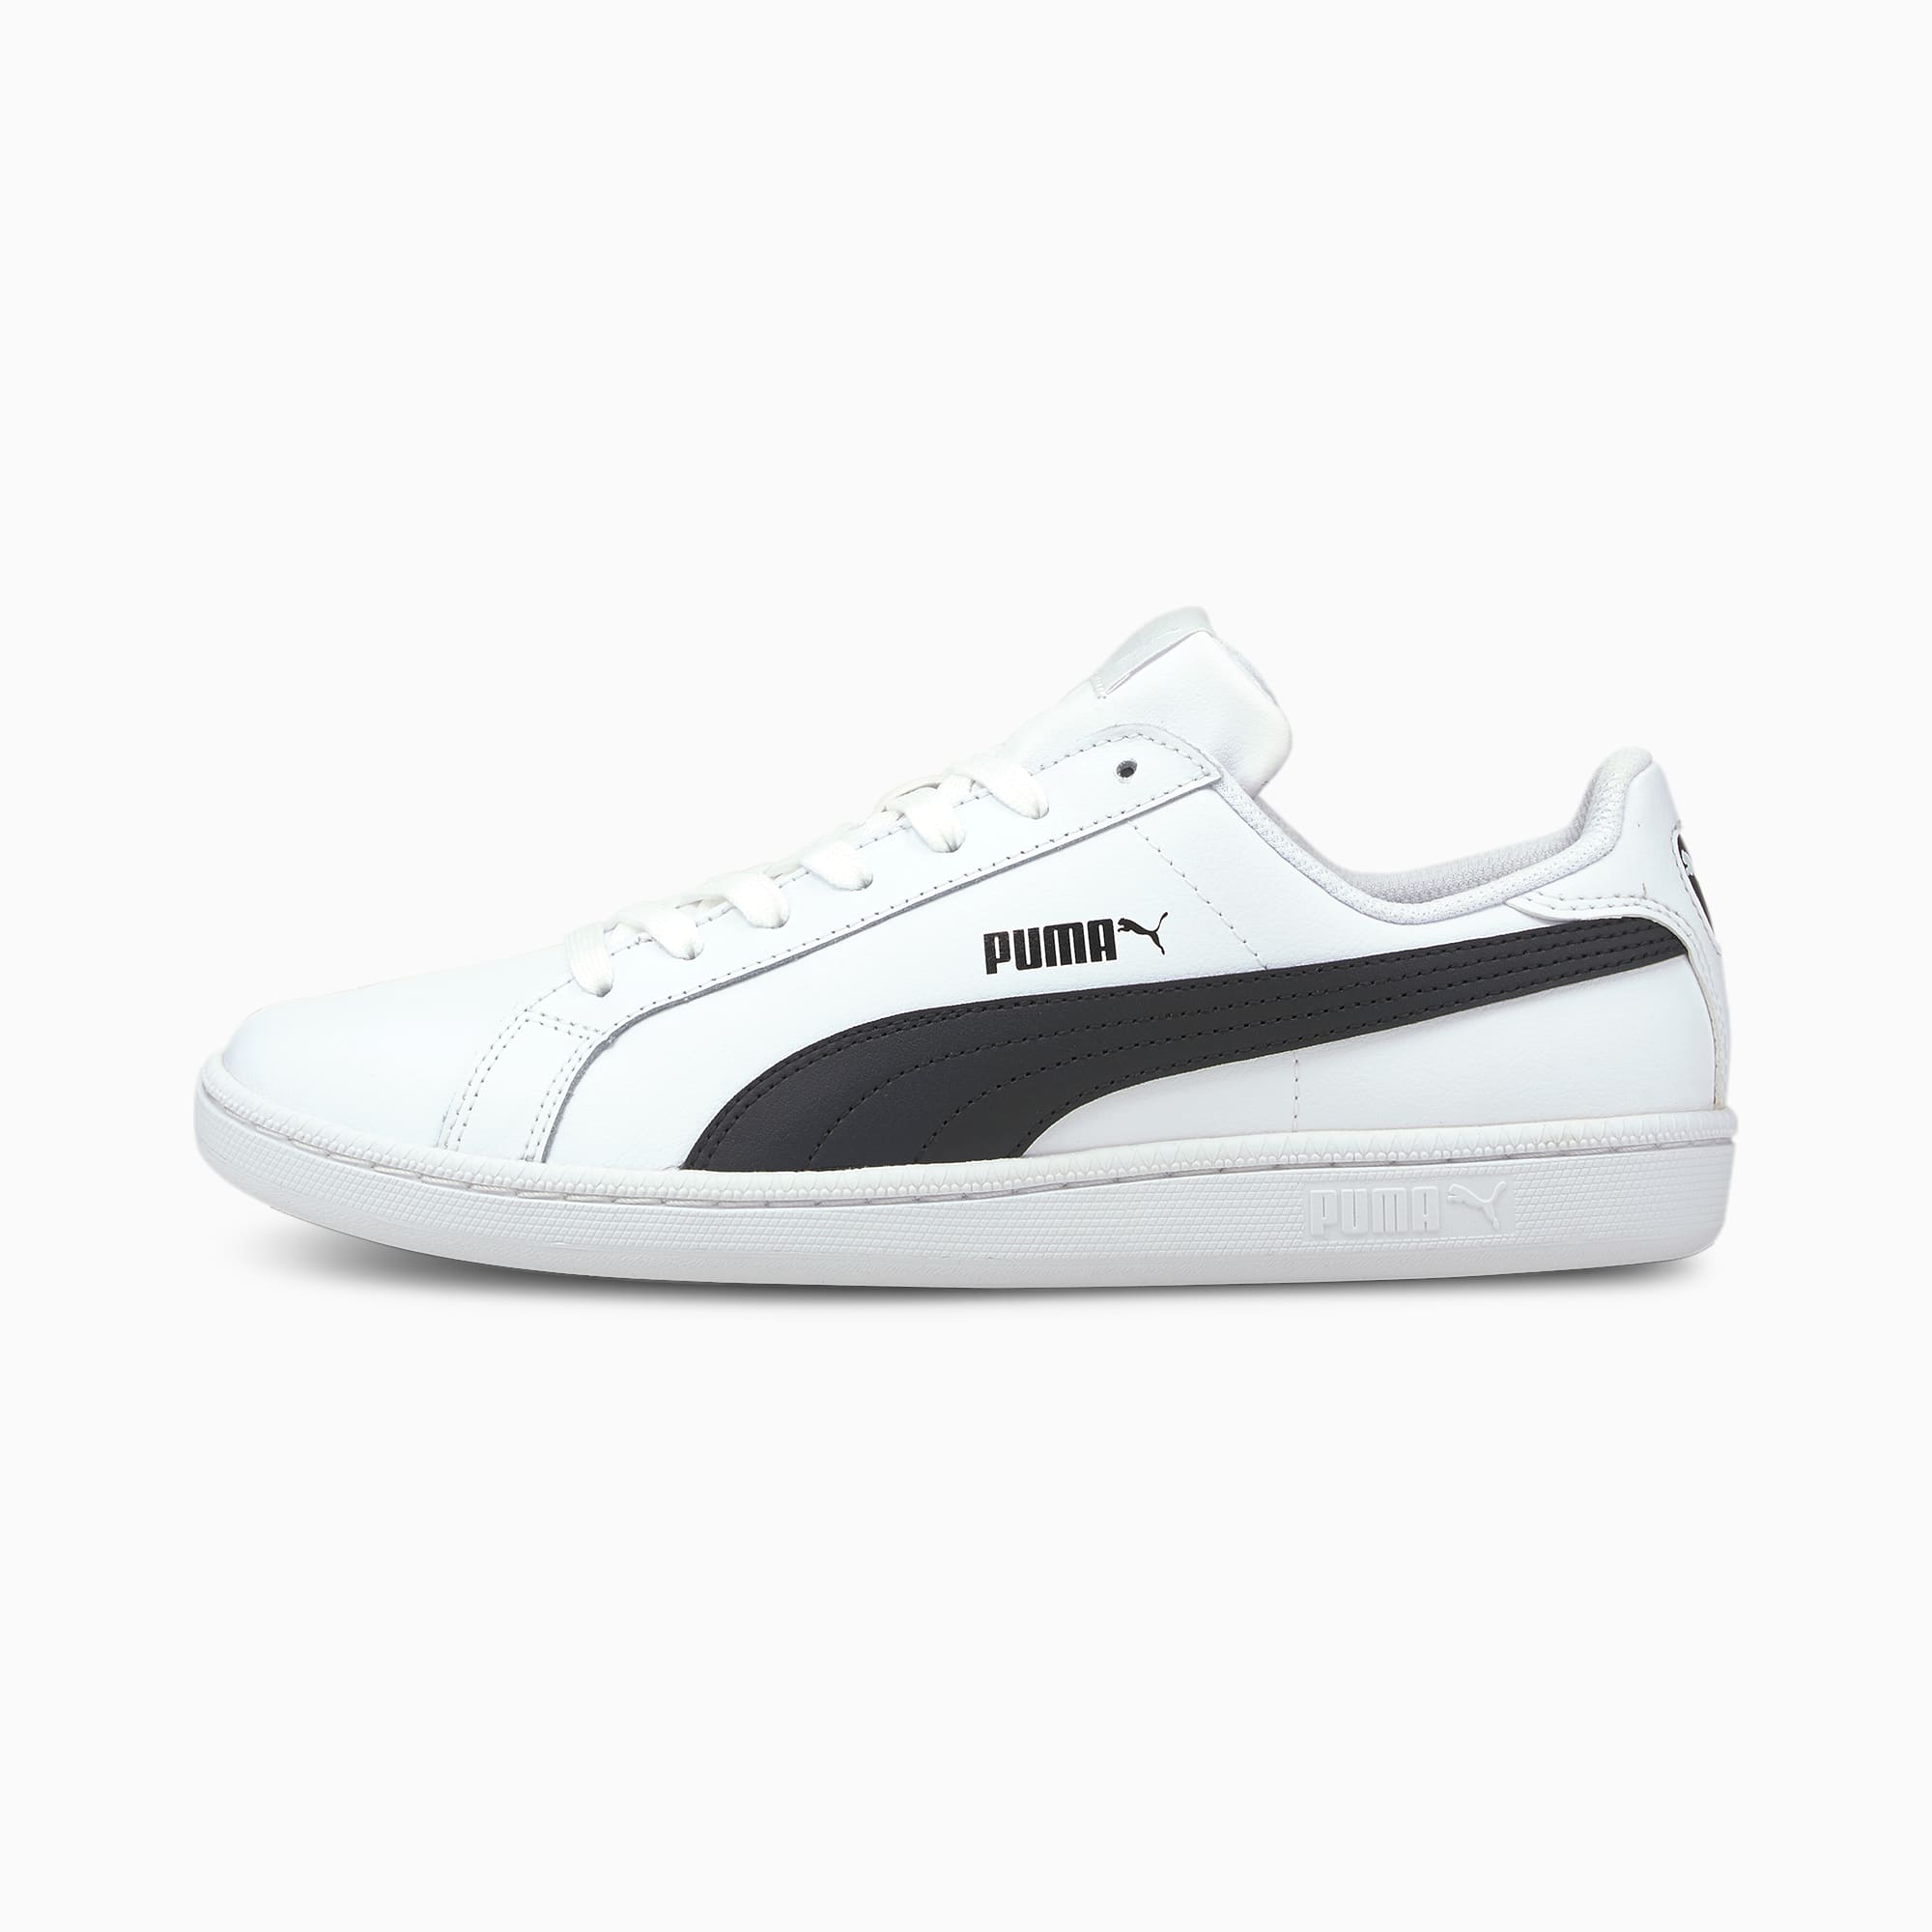 puma classic white leather trainers